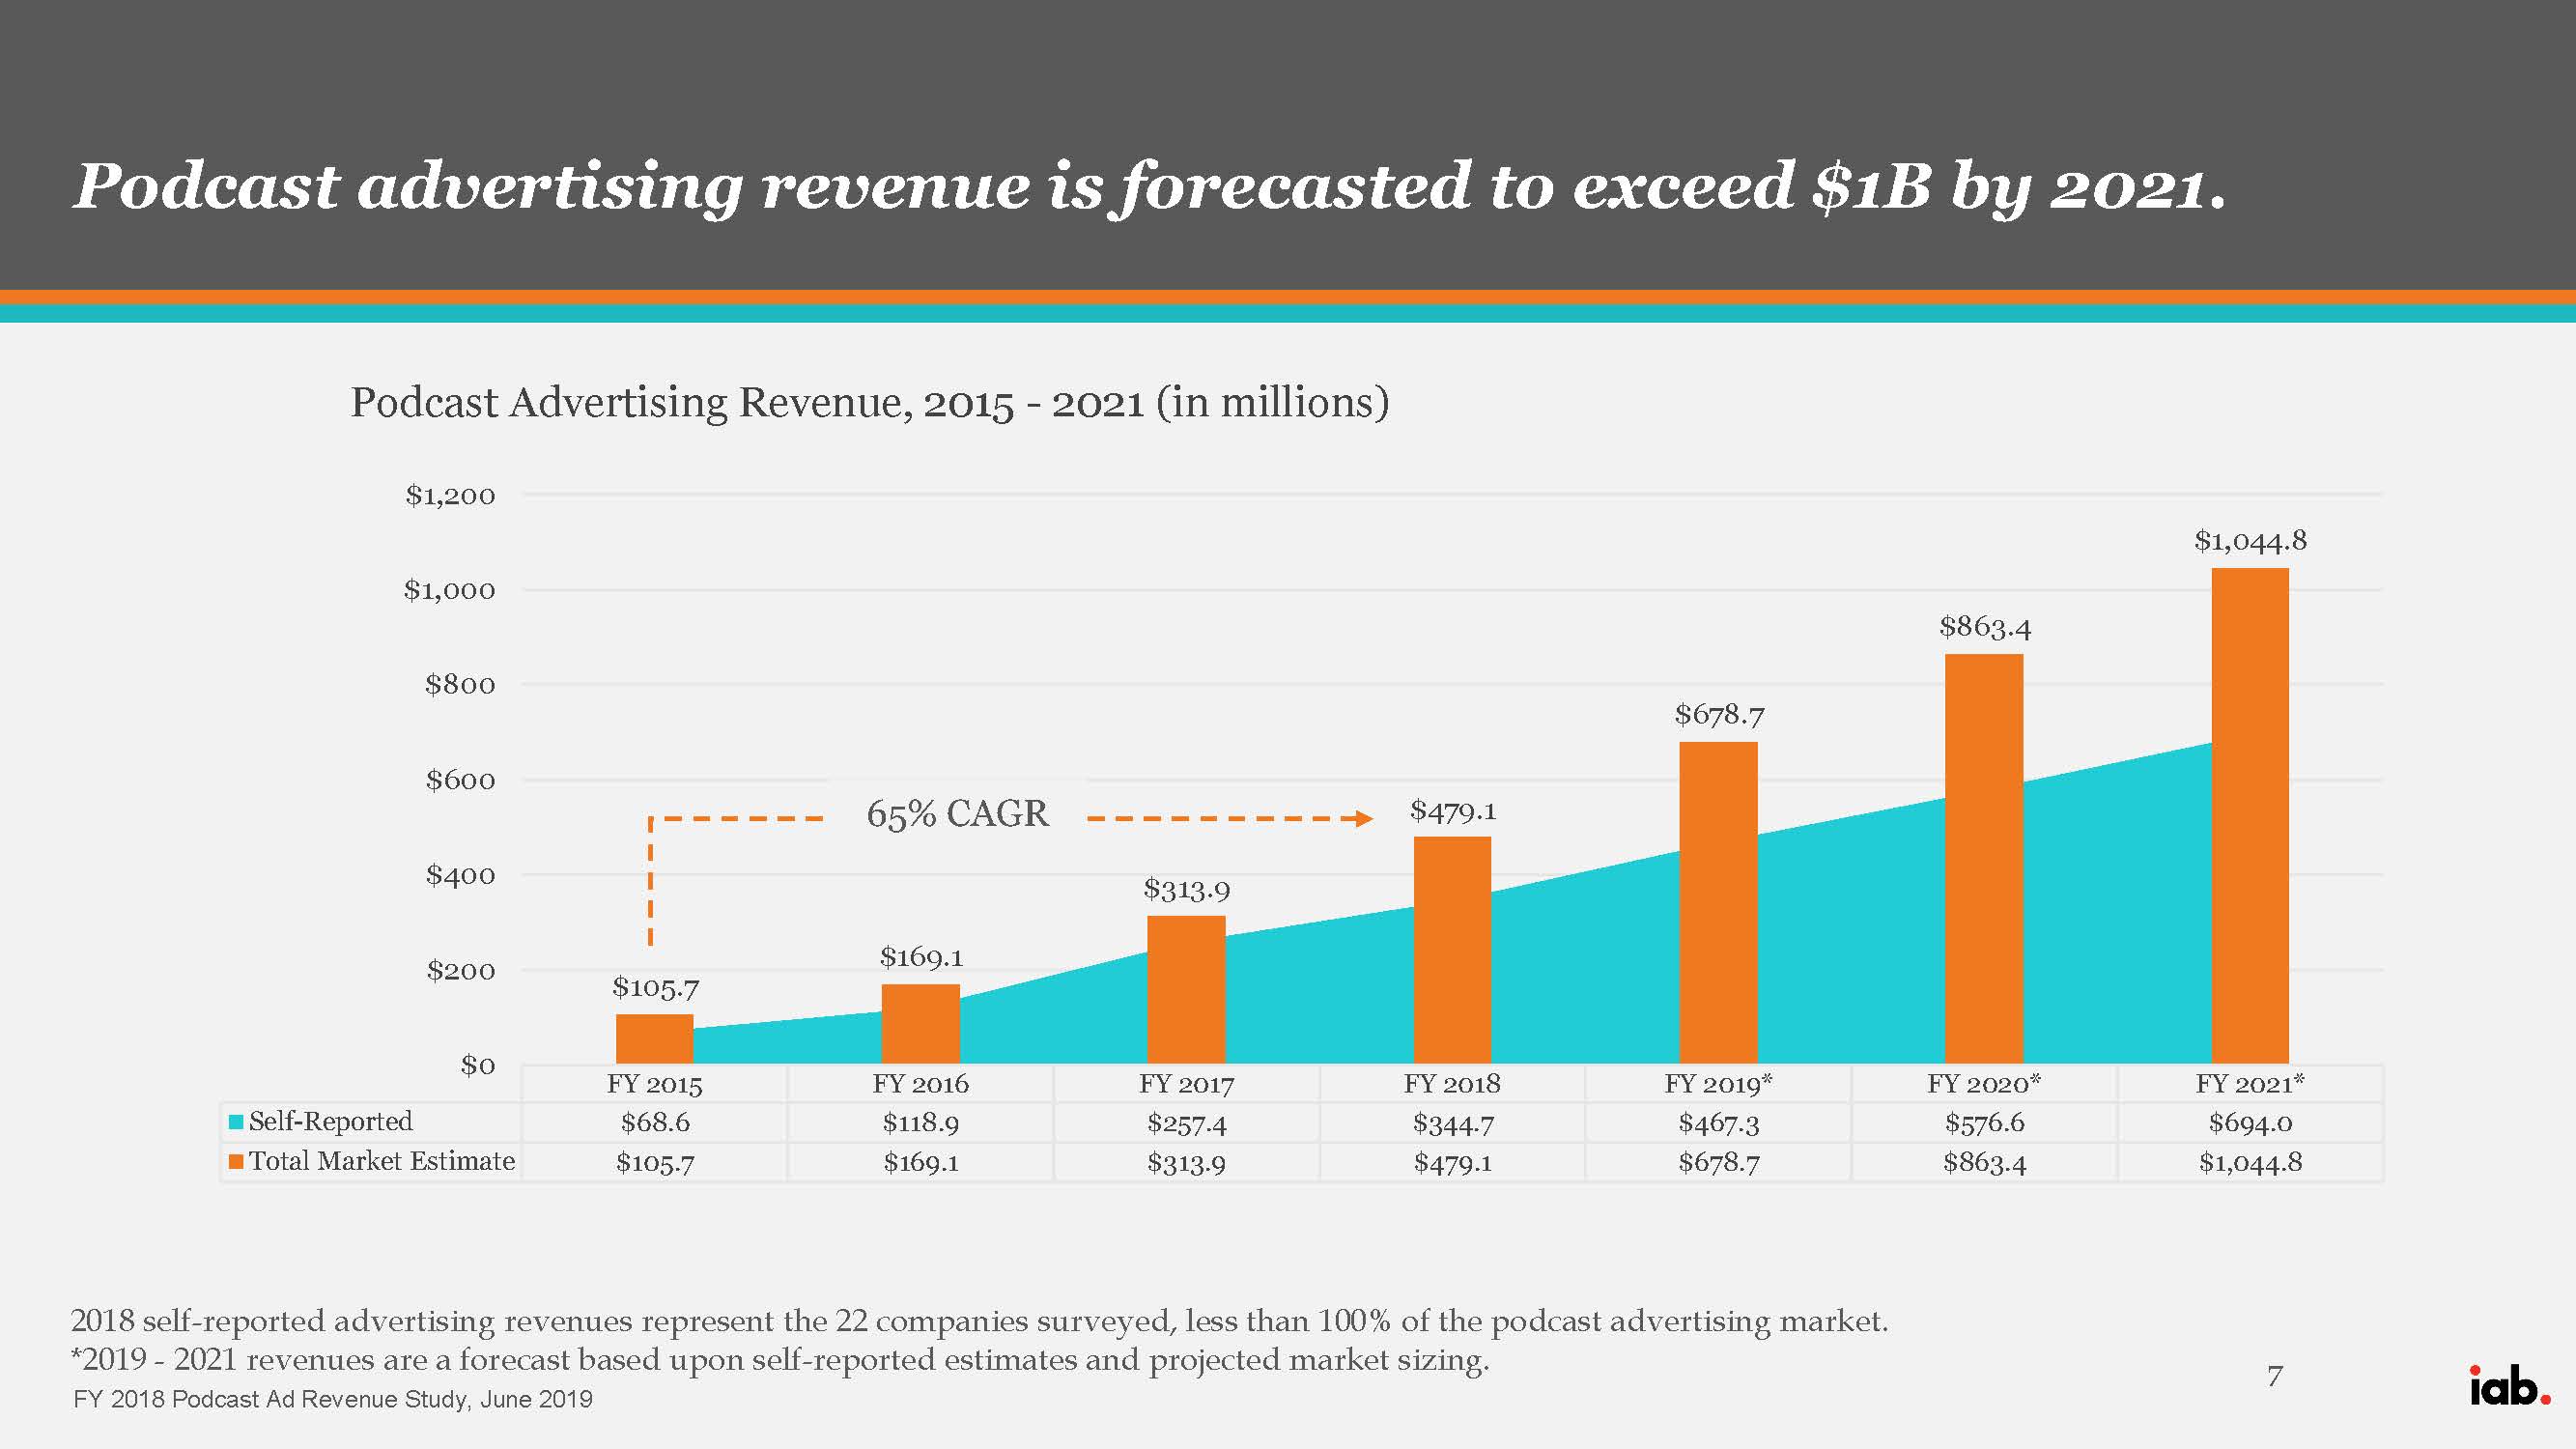 Podcast Advertising Revenue, 2015 - 2021 chart